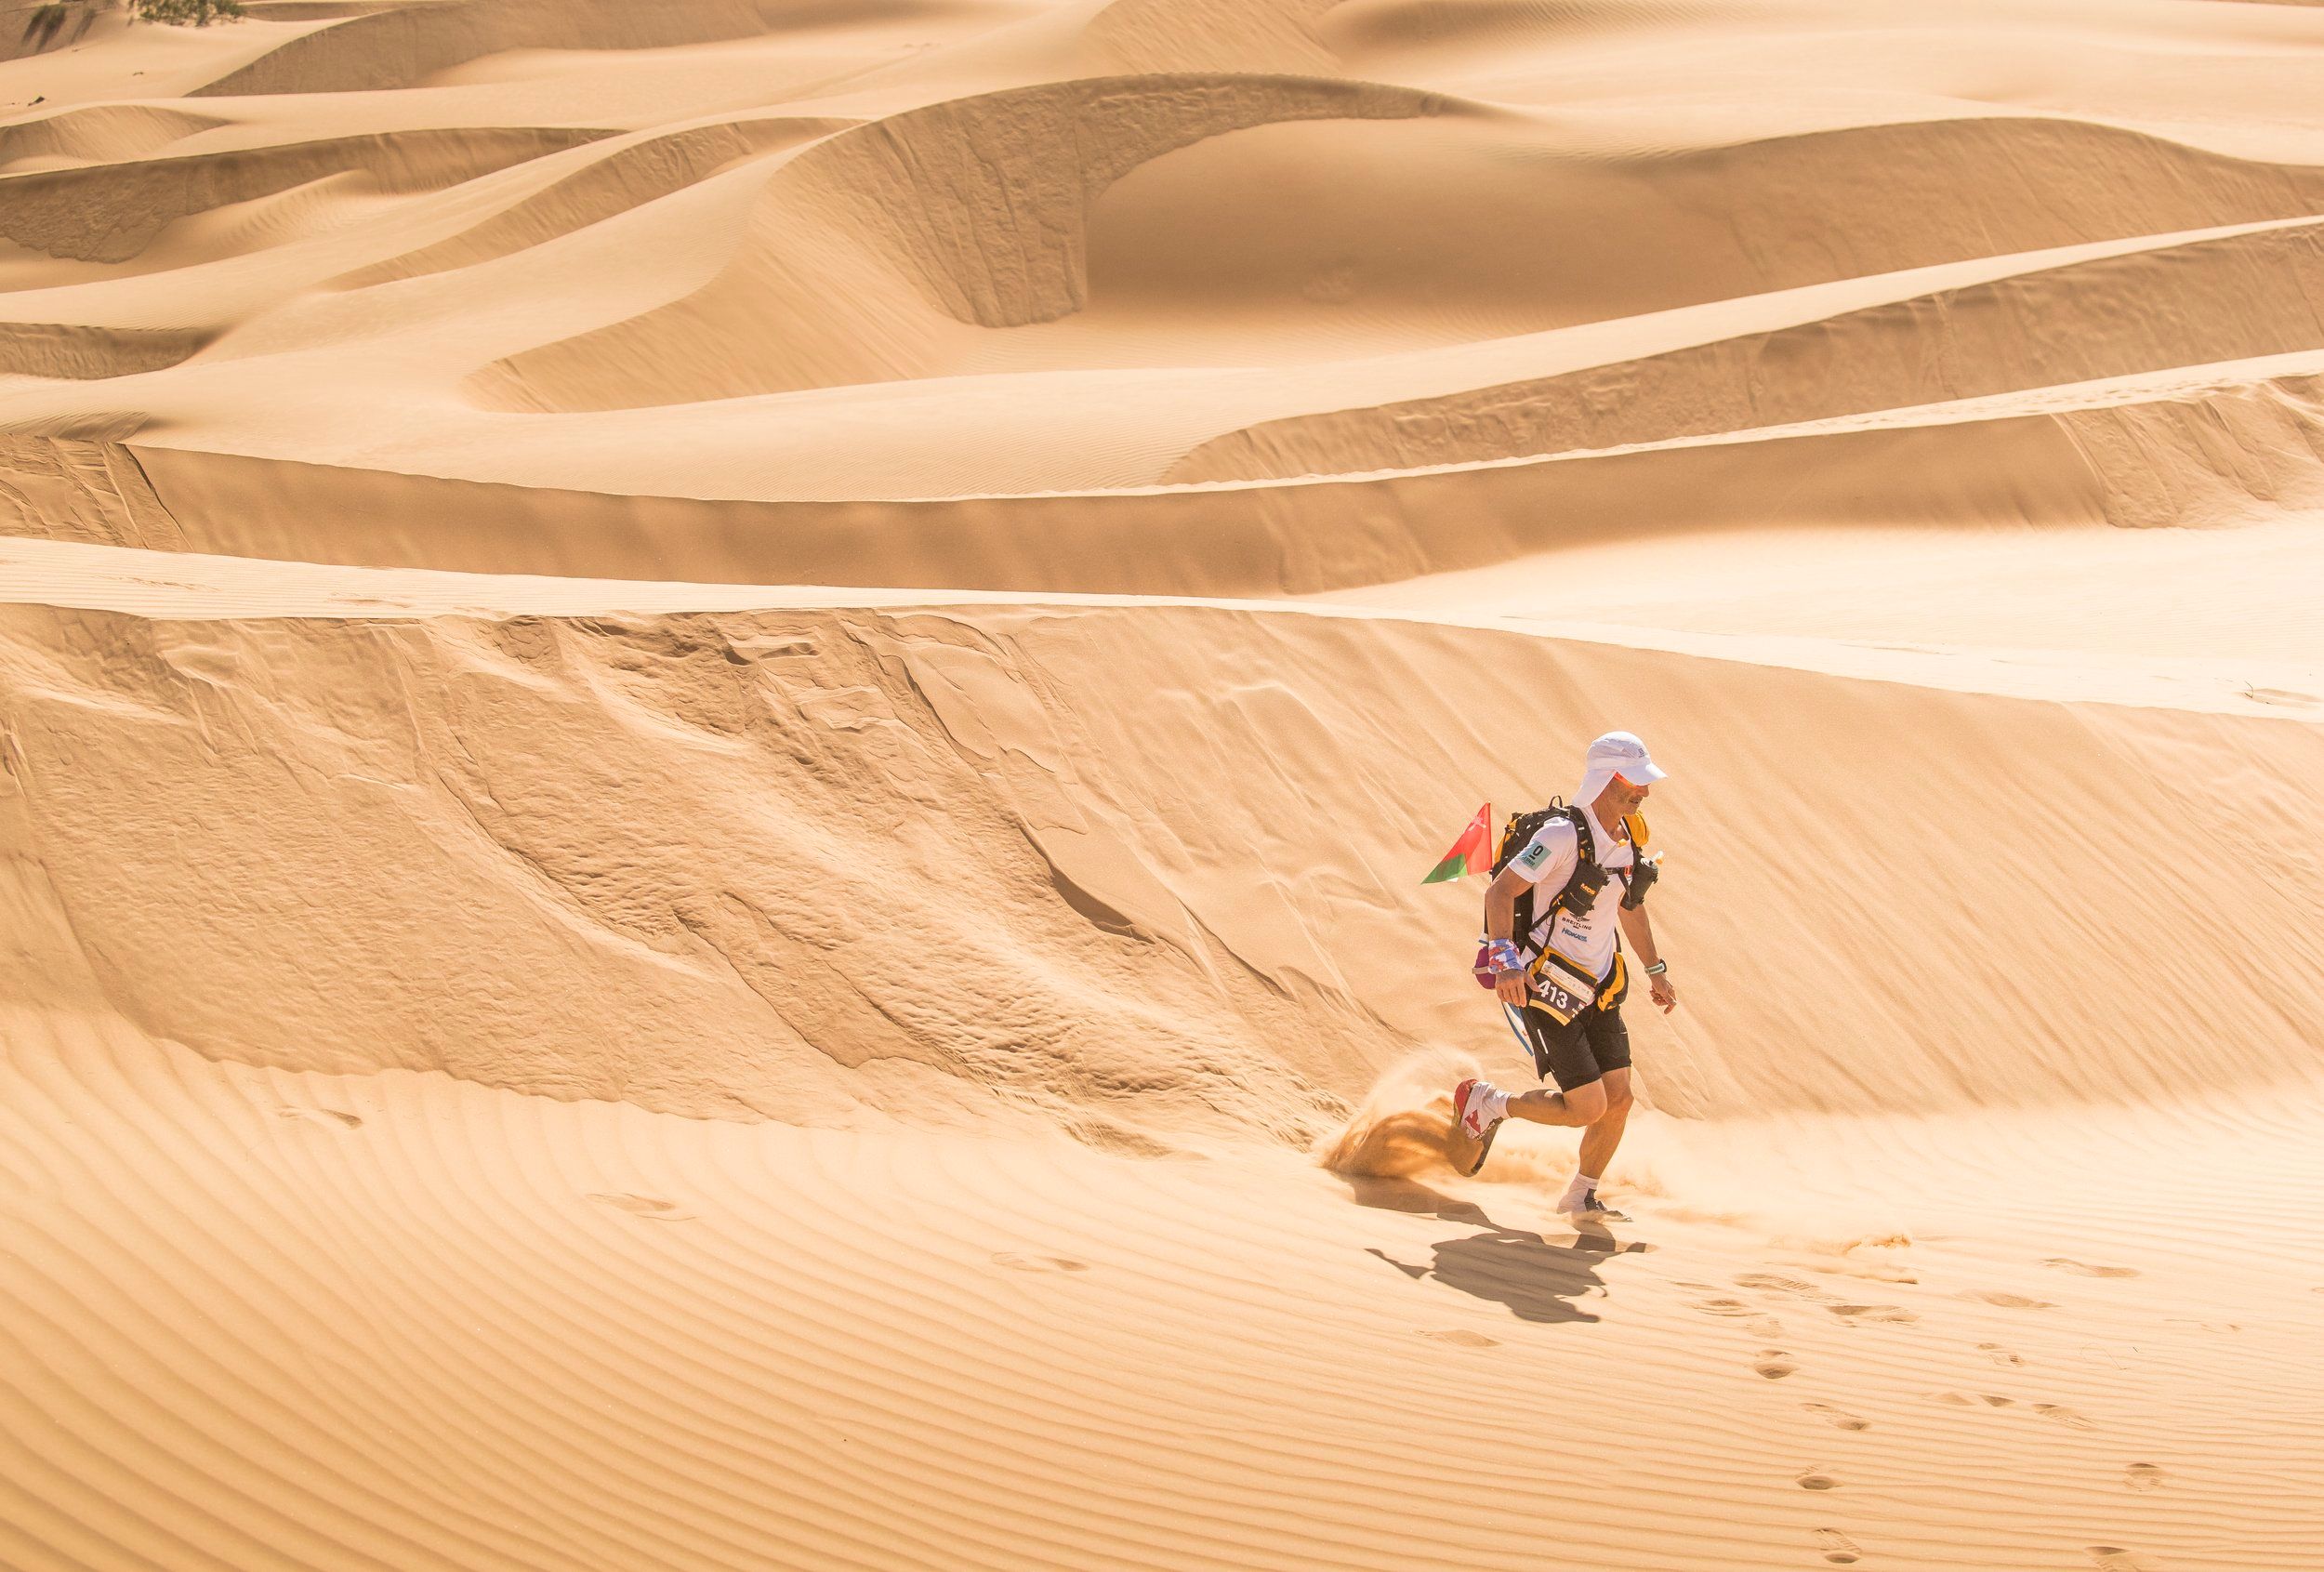 The Oman Desert Marathon returns in 2022 after a two-year hiatus.